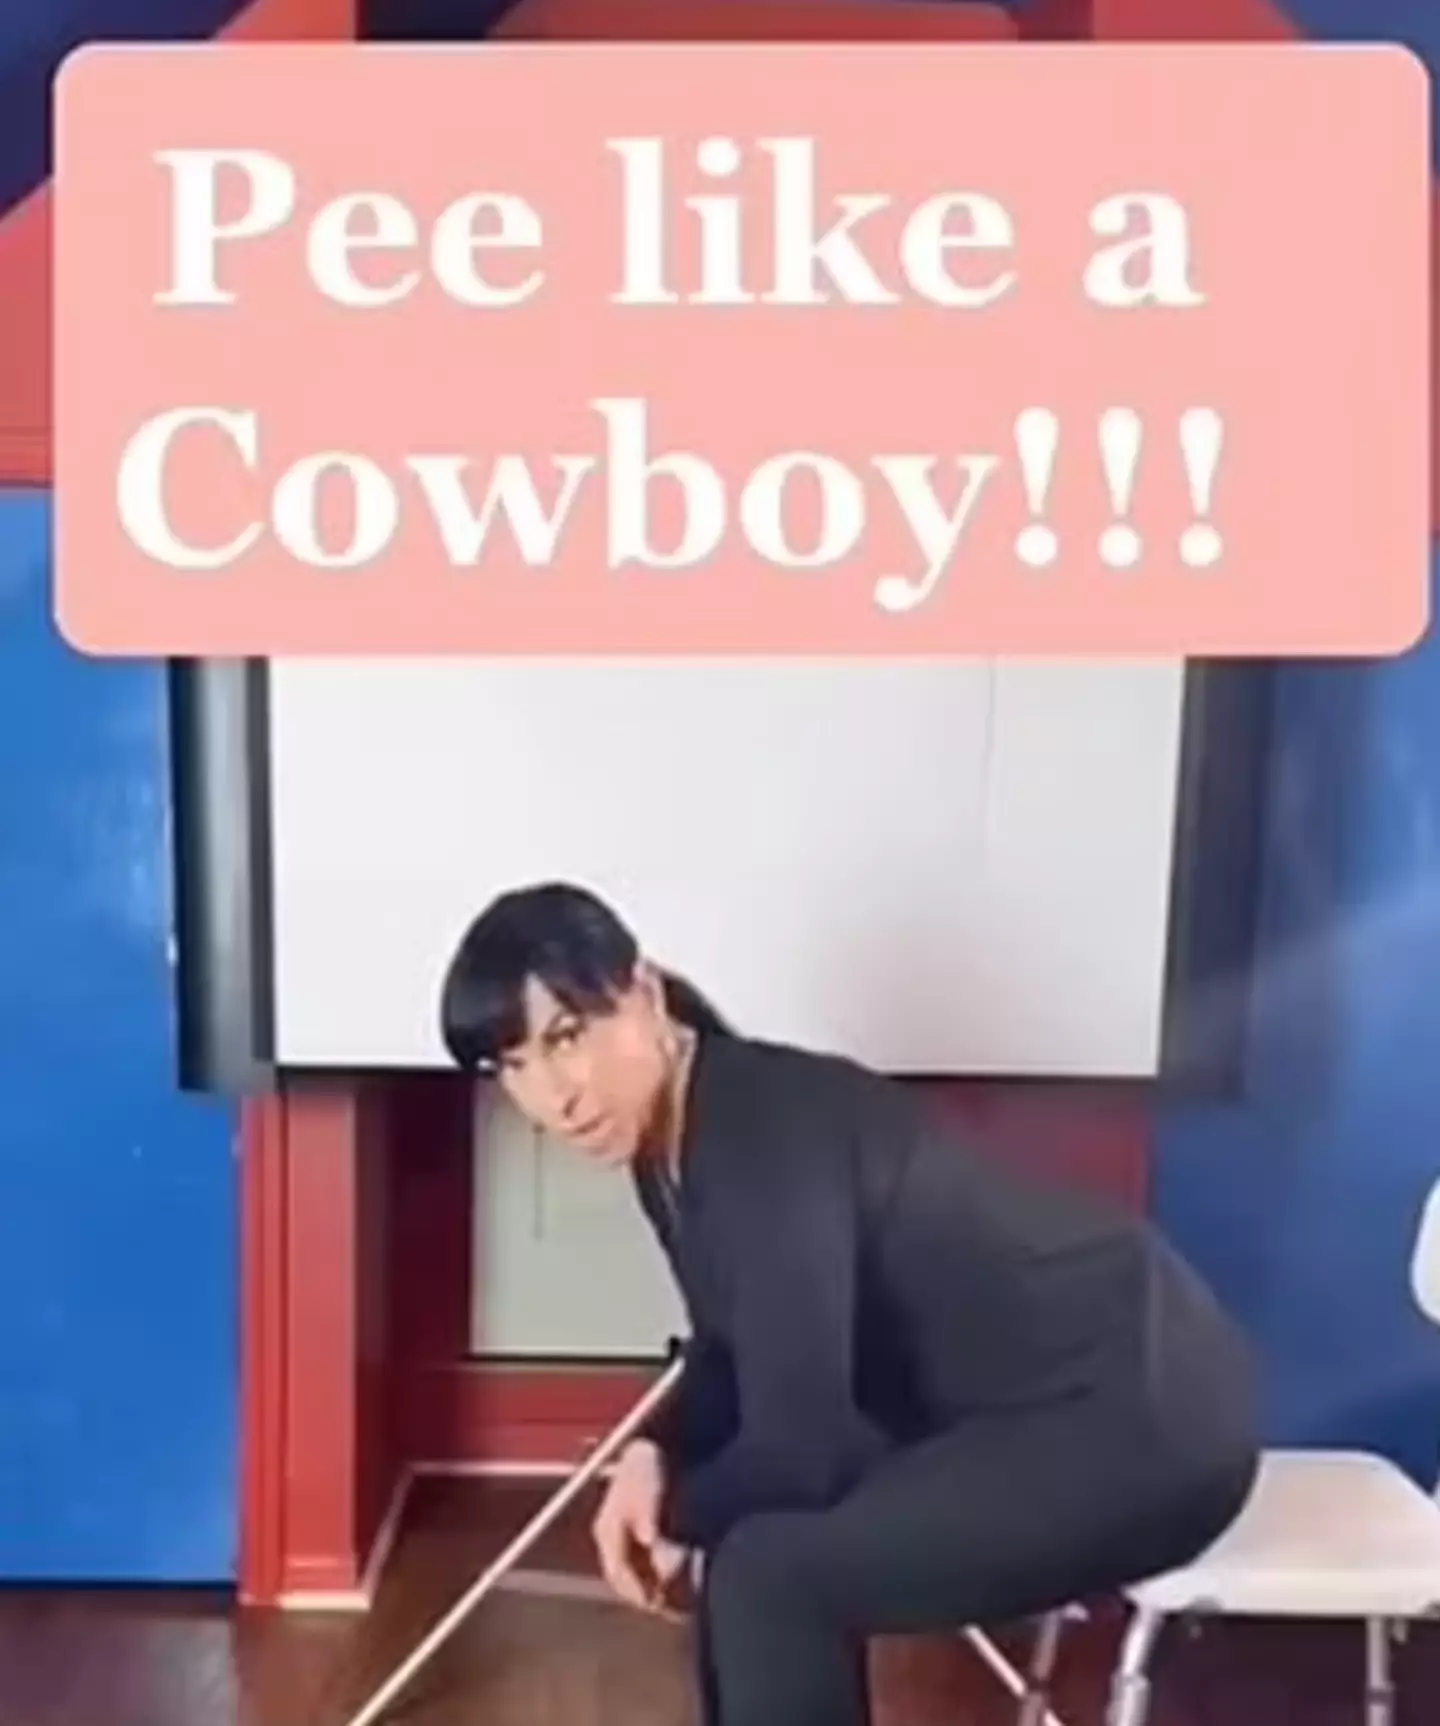 You should pee like a cowboy if you have a vagina.